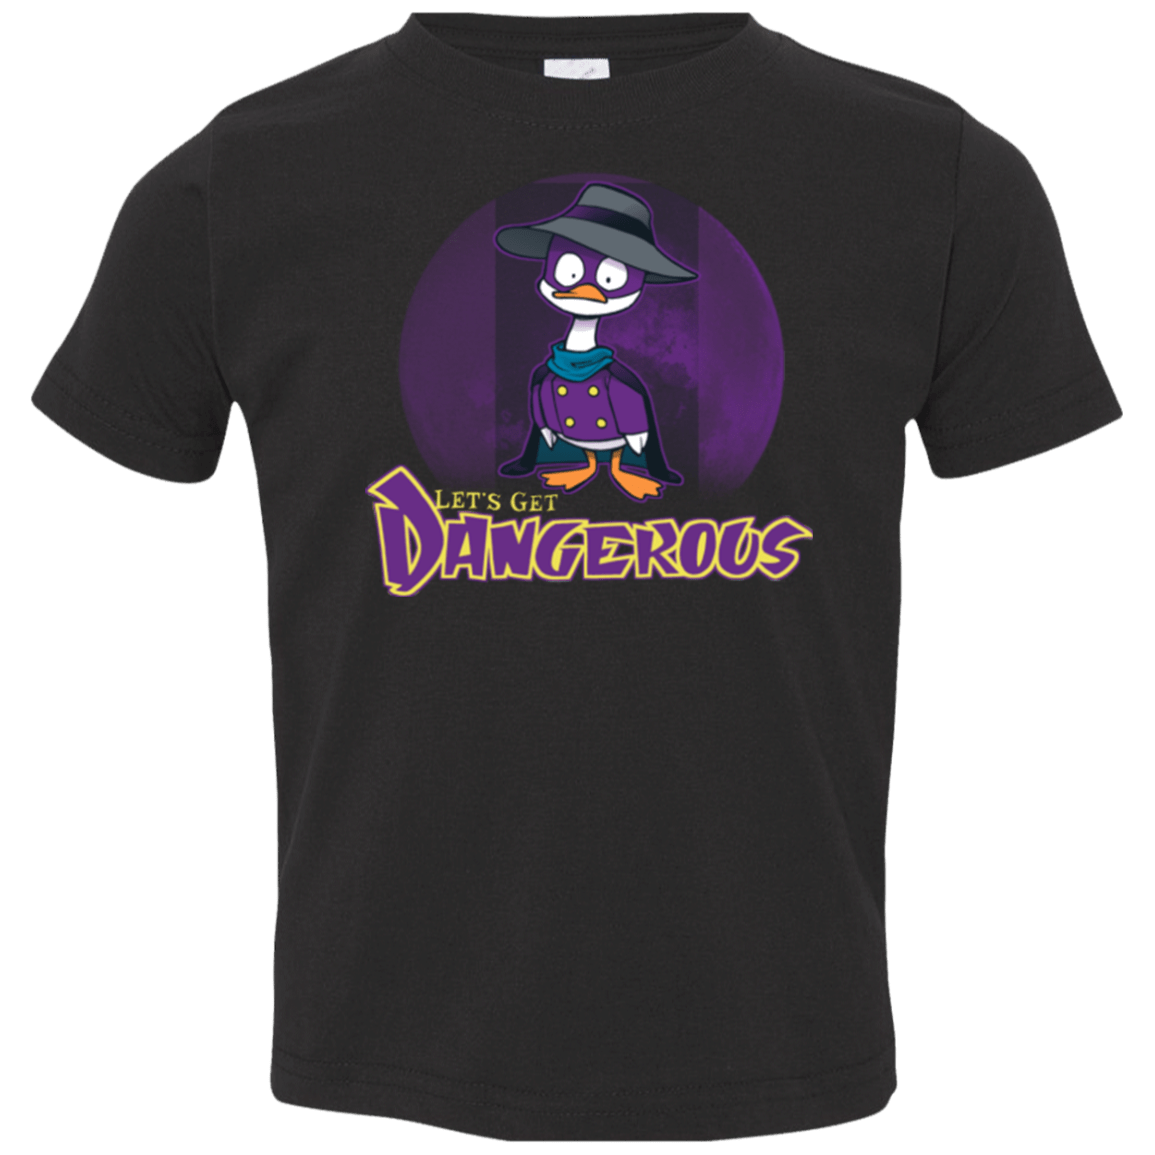 DW Duck Toddler Premium T-Shirt